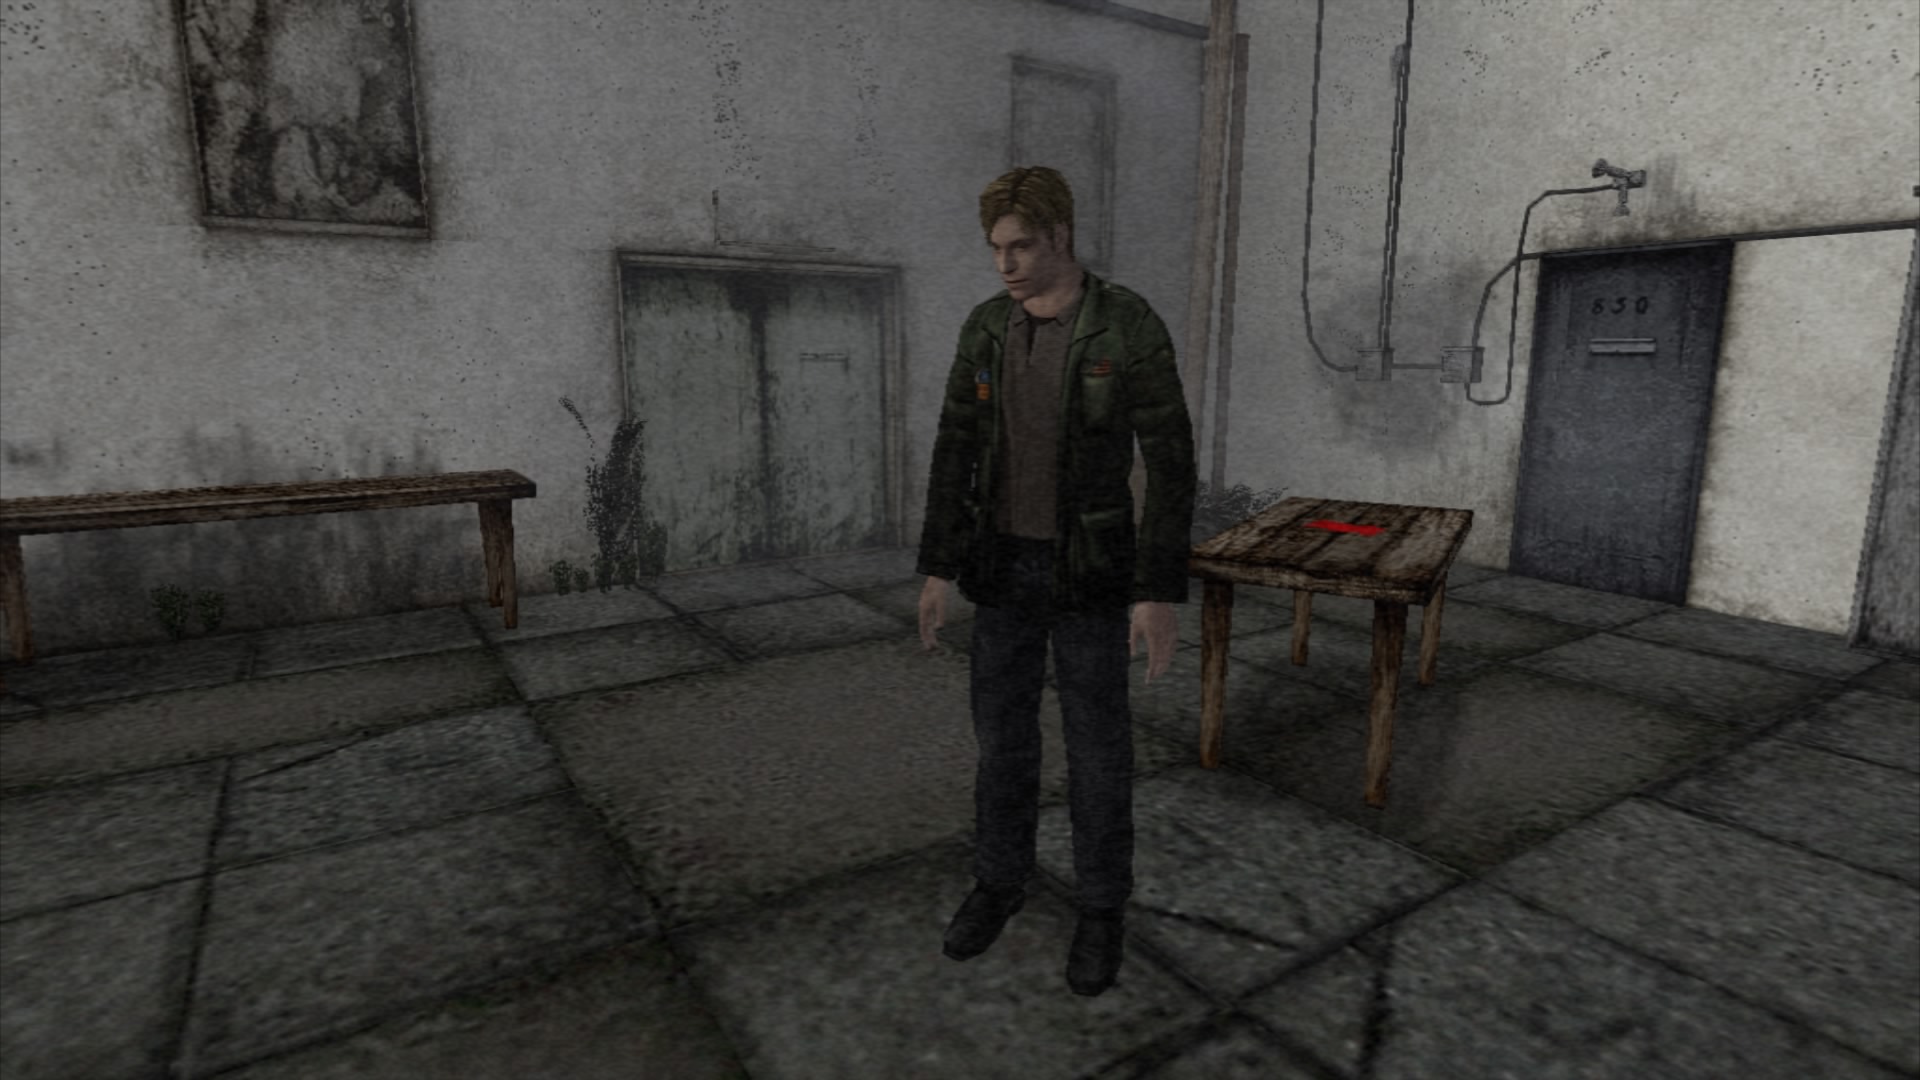 Скриншот *Silent Hill 2 - Director's Cut [PS4 PS2 Classics] 5.05 / 6.72 / 7.02 [EUR] (2001) [Русский] (v1.00)*